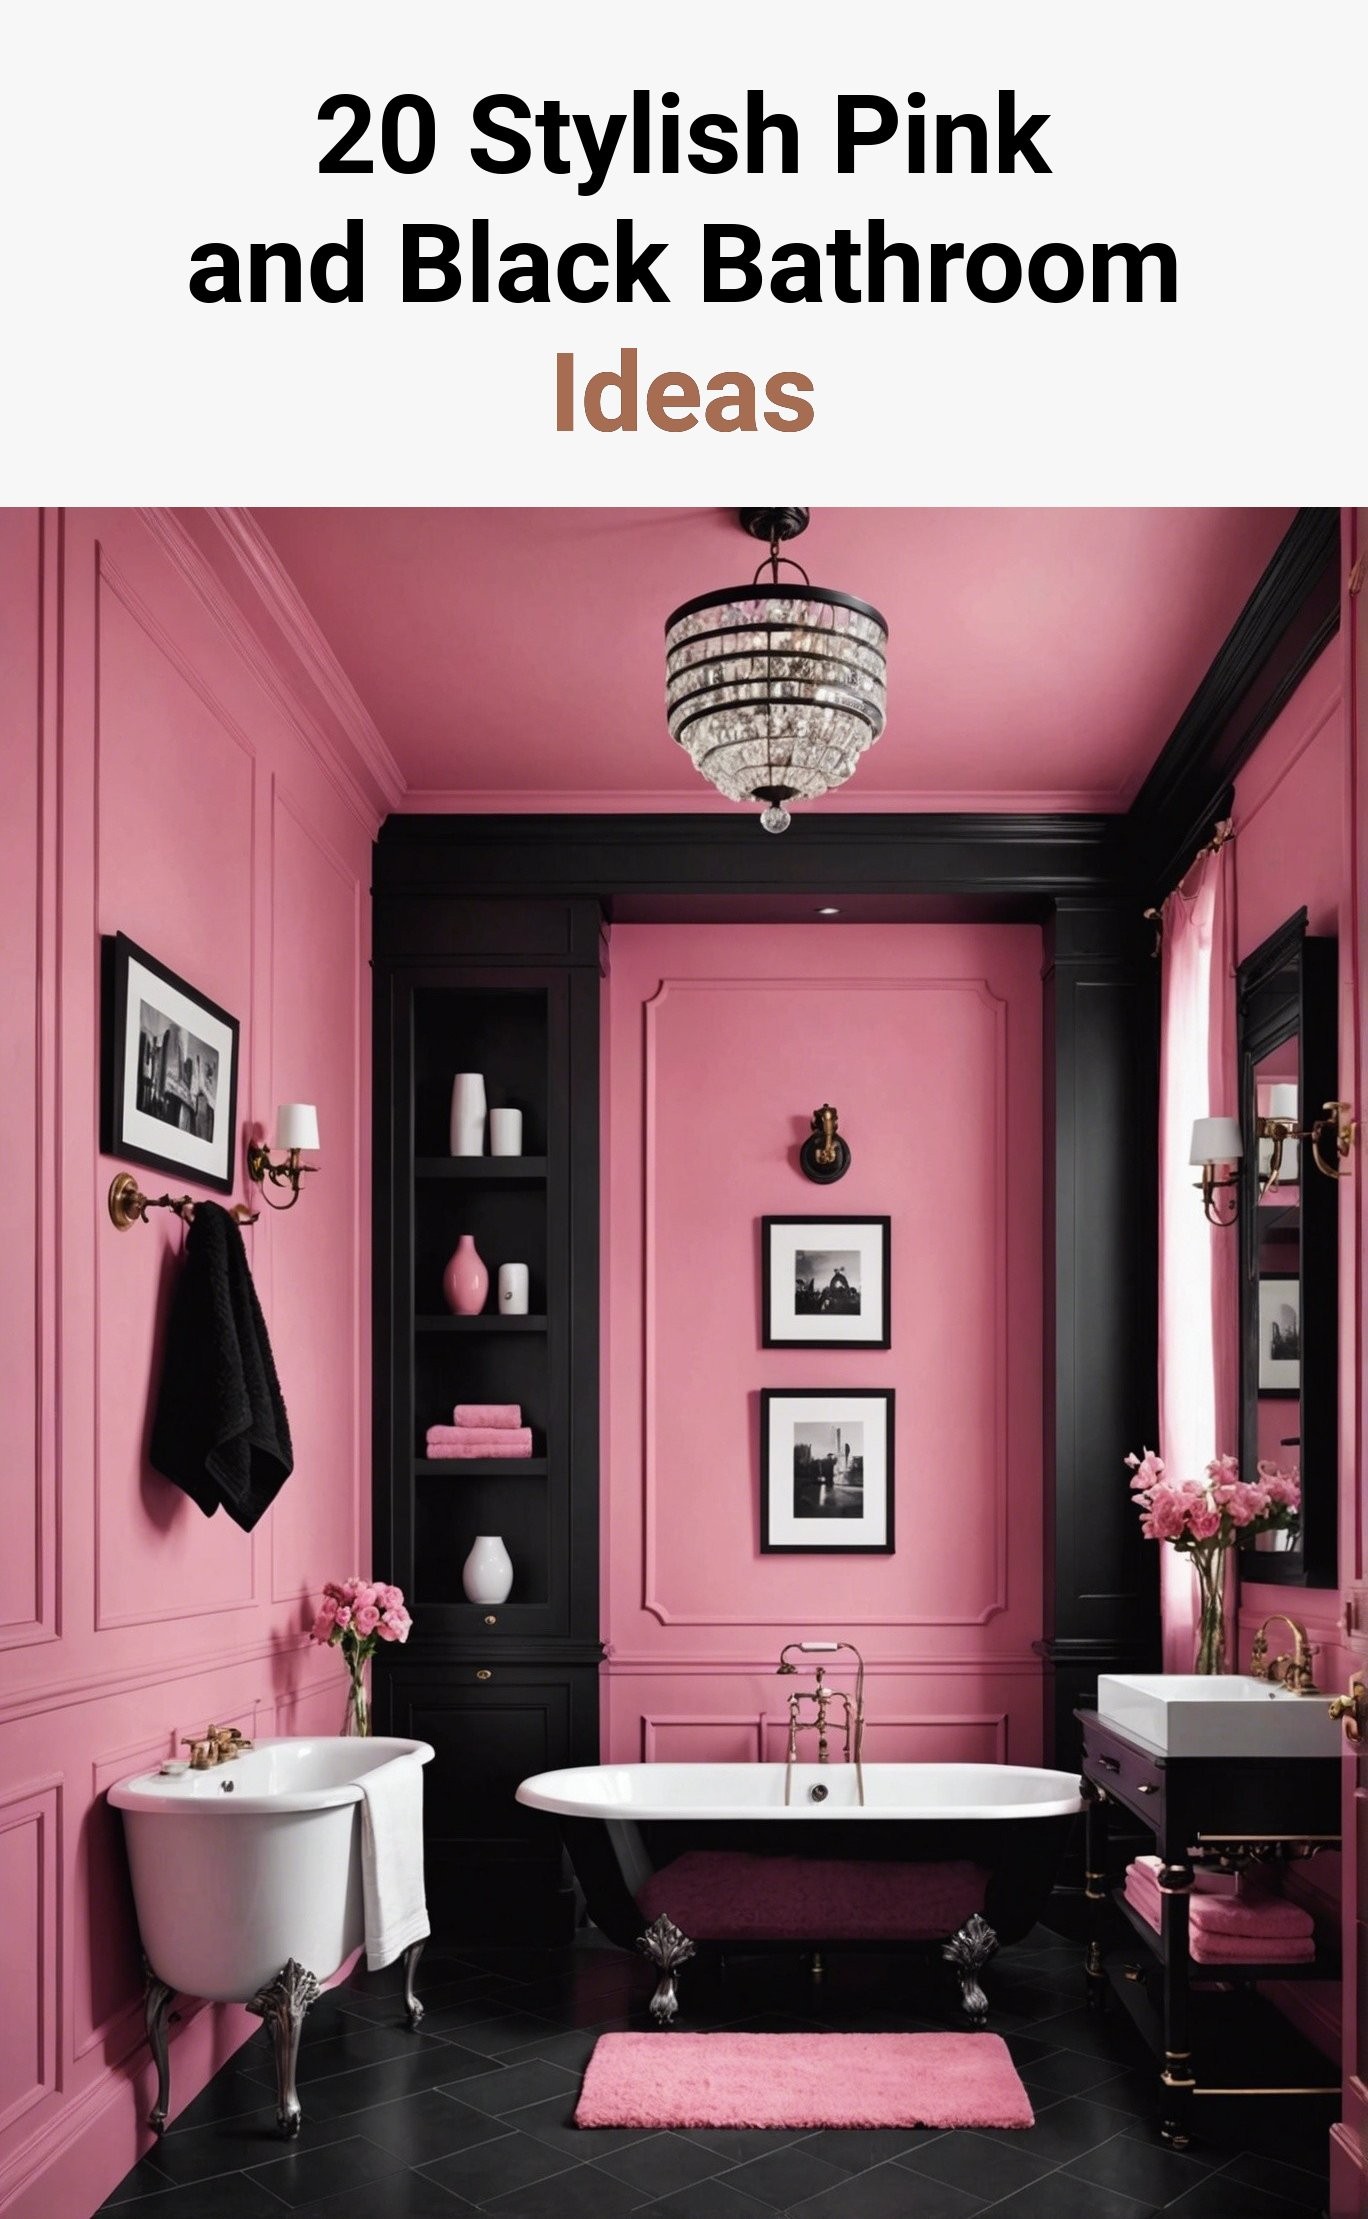 20 Stylish Pink and Black Bathroom Ideas